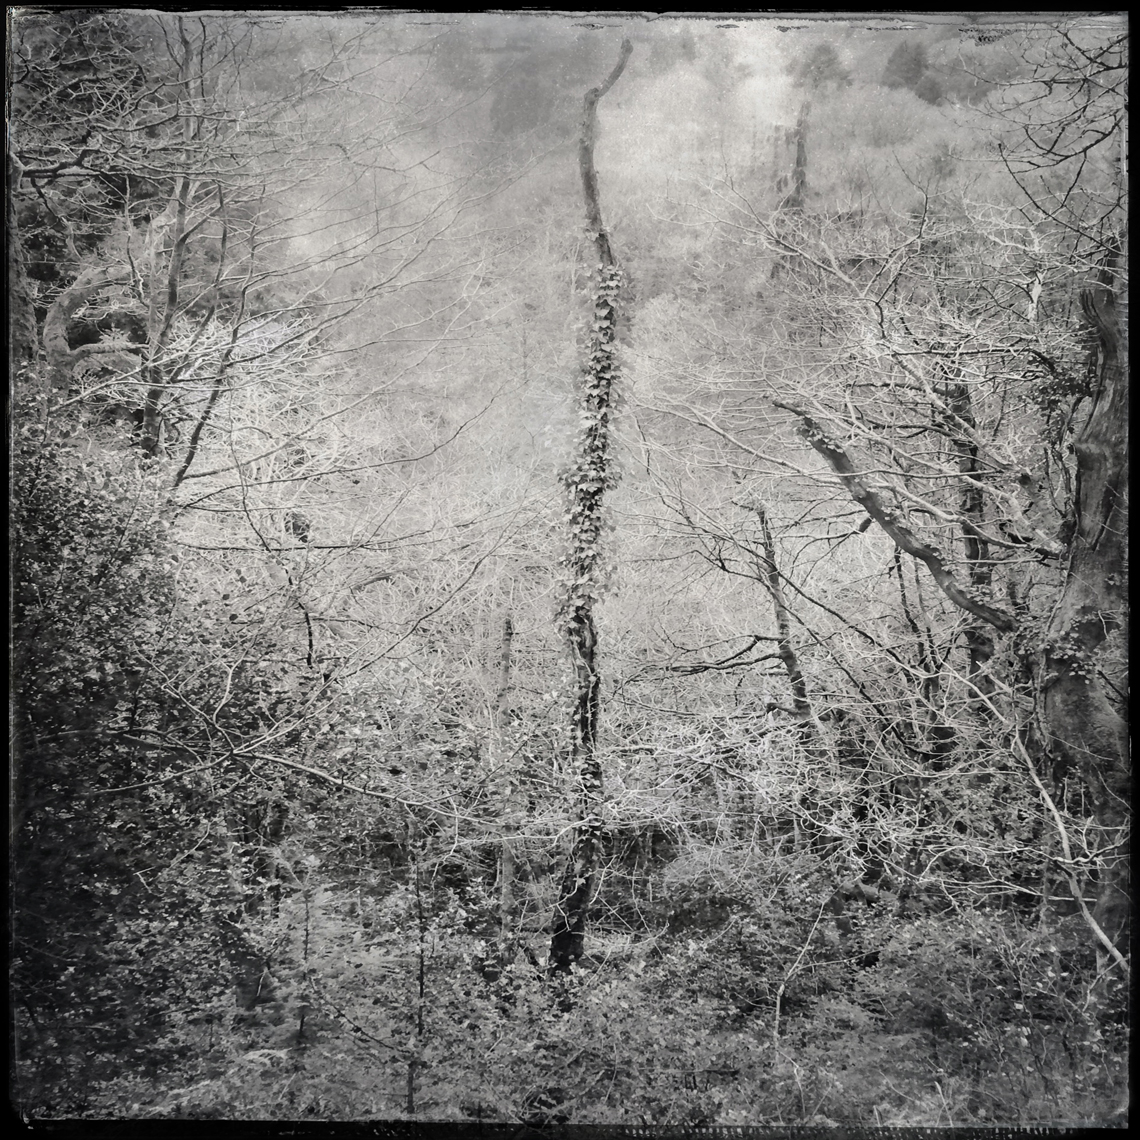 Jon Wyatt Photography - woodland paths in Cornwall & Devon